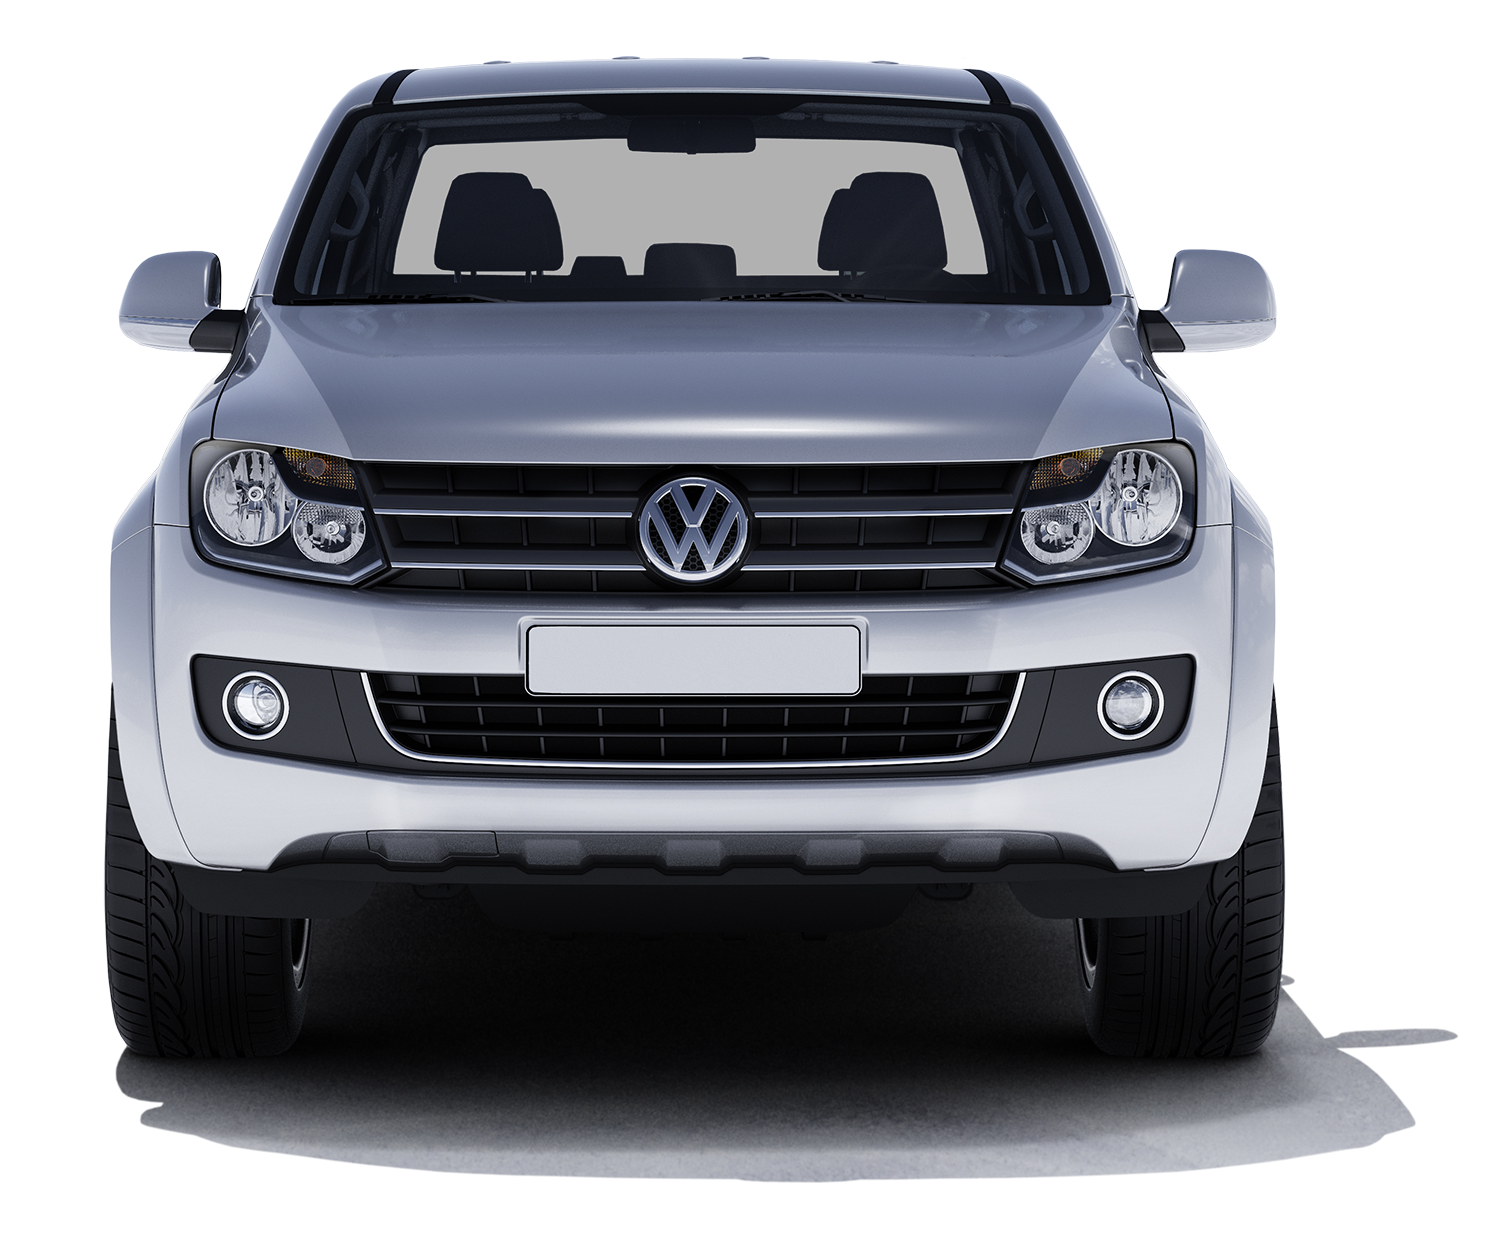 Volkswagen Png Car Image - Volkswagen, Transparent background PNG HD thumbnail